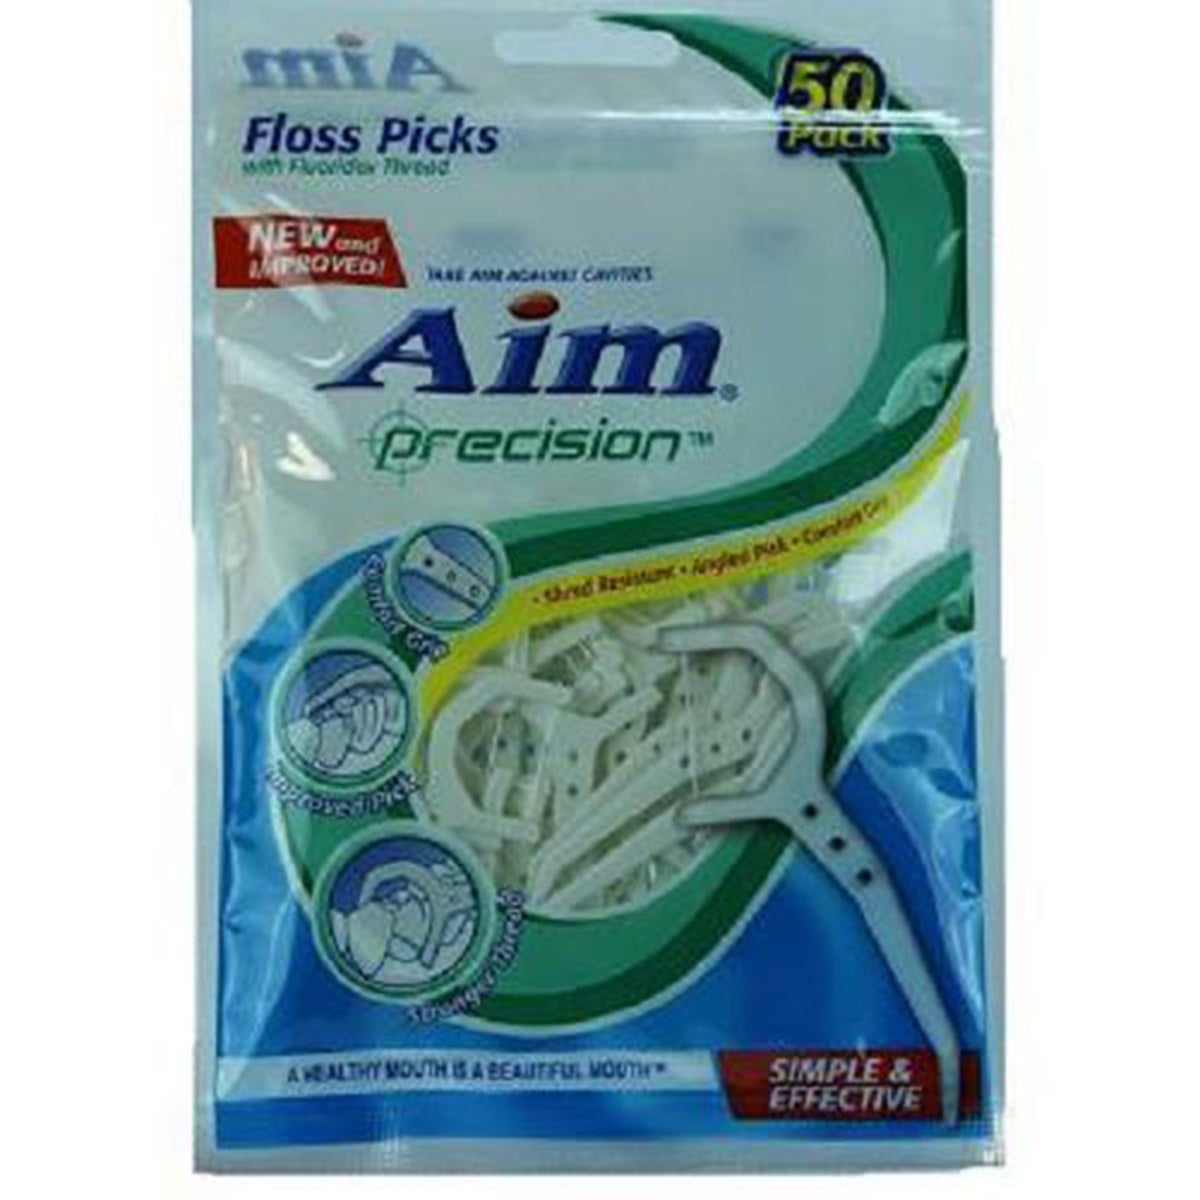 Aim Precision Floss Picks 50 Pack